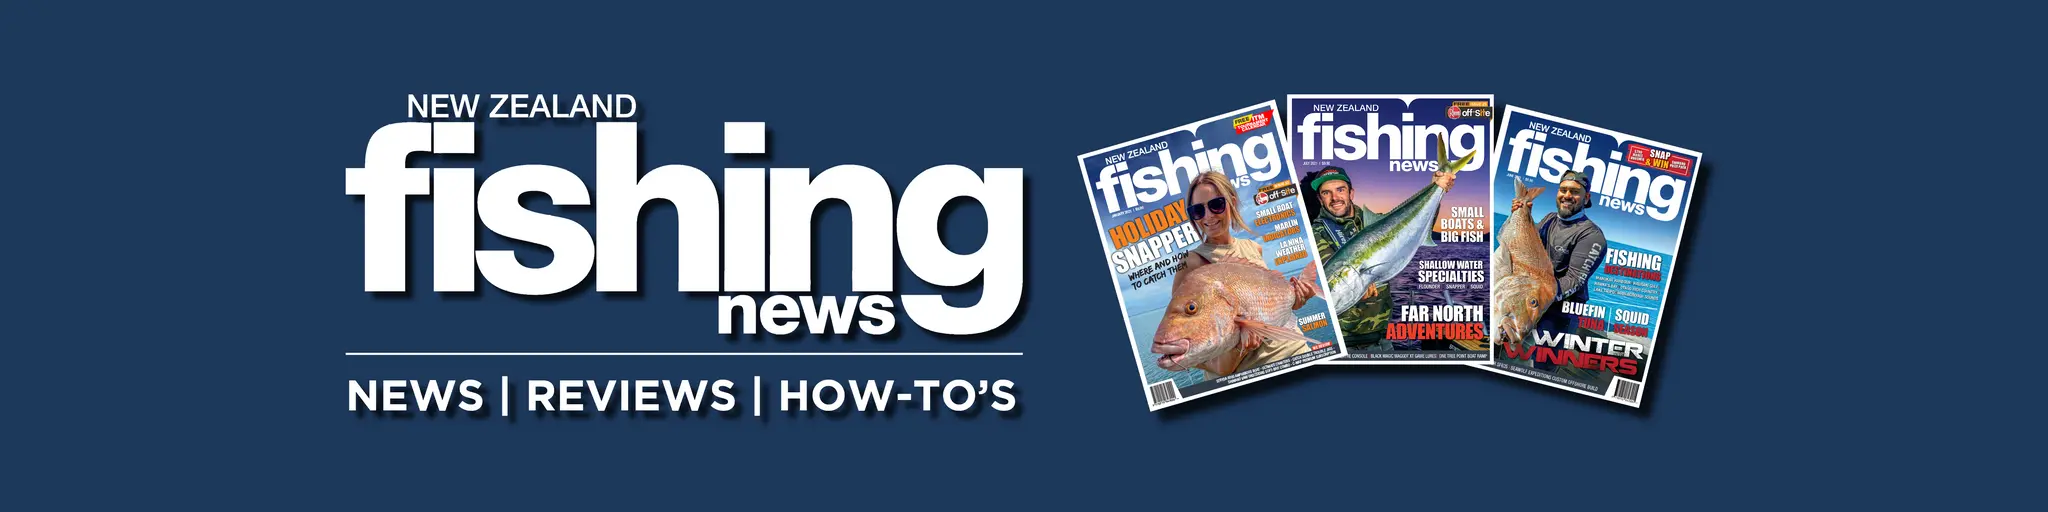 New Zealand Fishing News